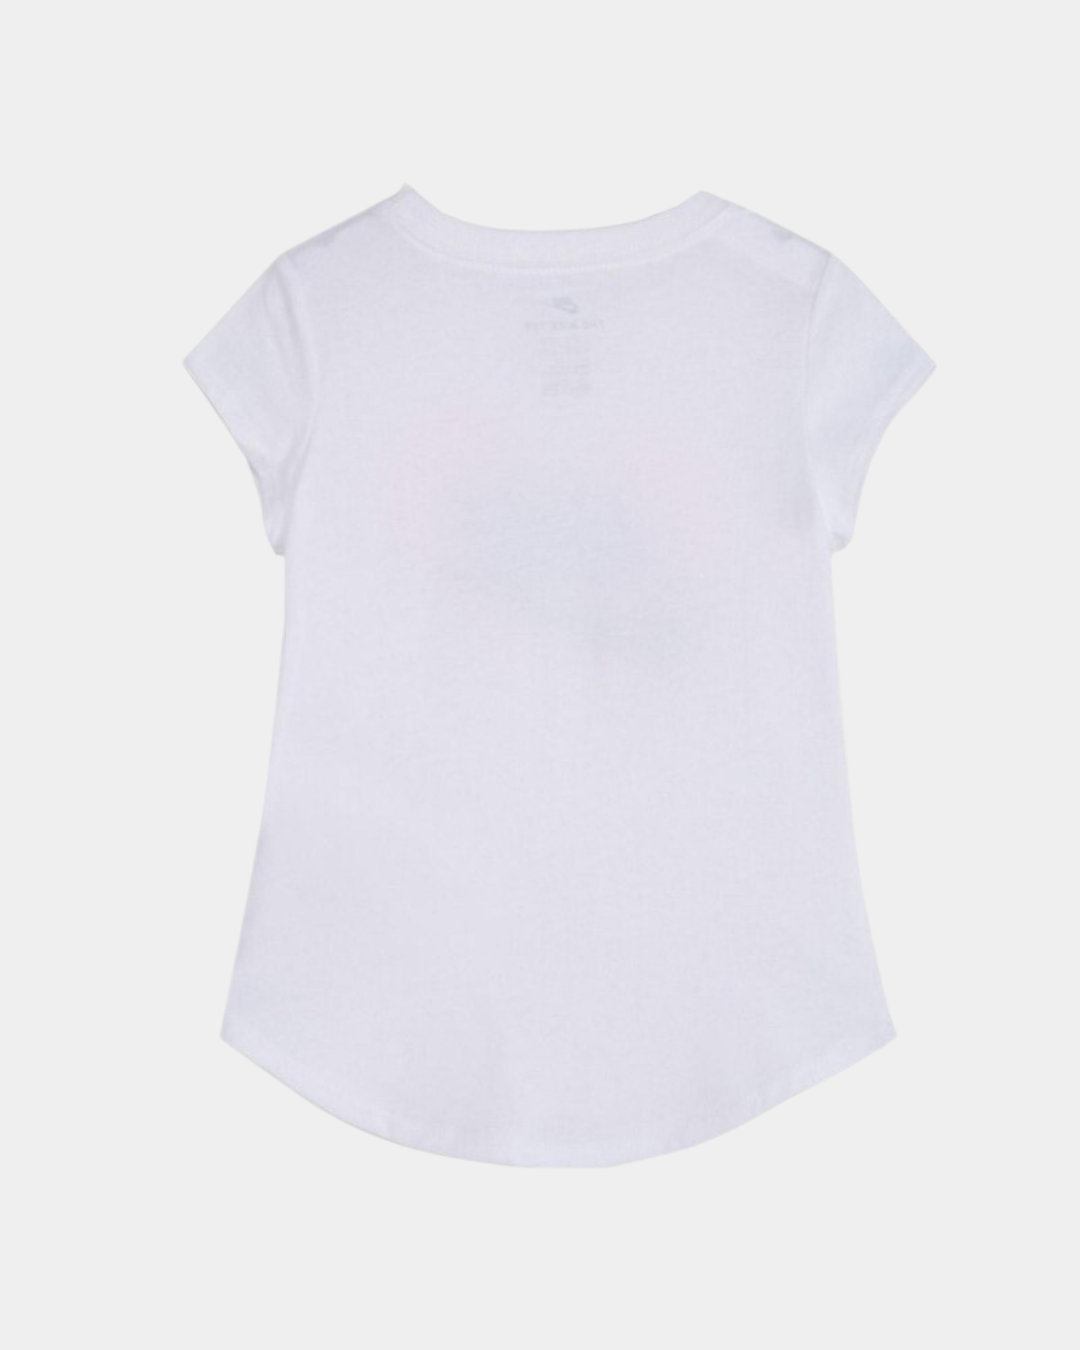 Nike Kinder T-Shirt – Weiß/Rosa/Blau